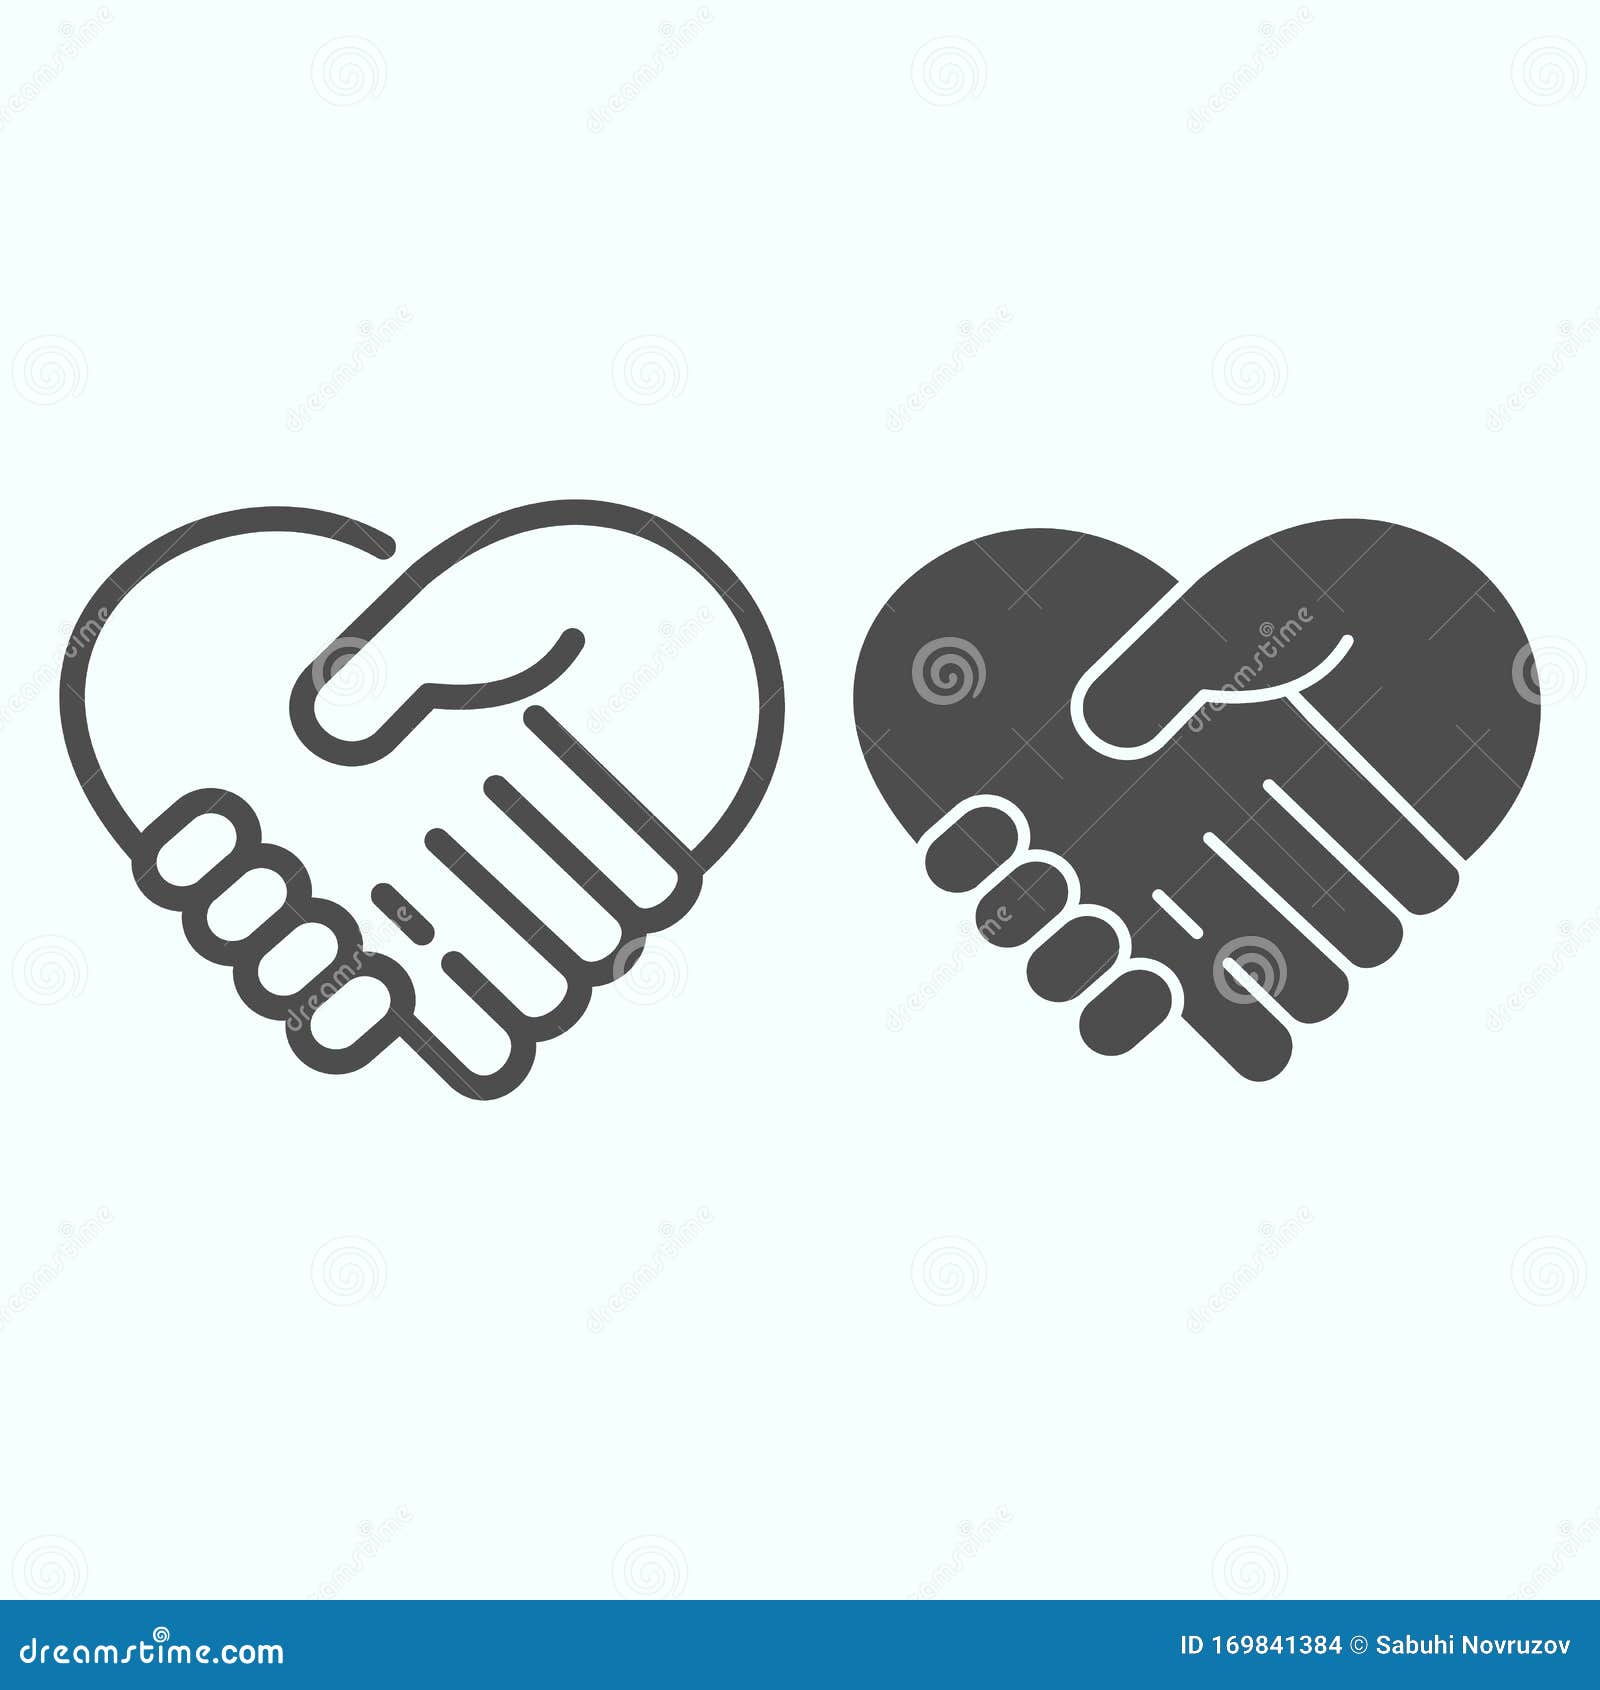 Handshake Skin 3 Vector SVG Icon - SVG Repo